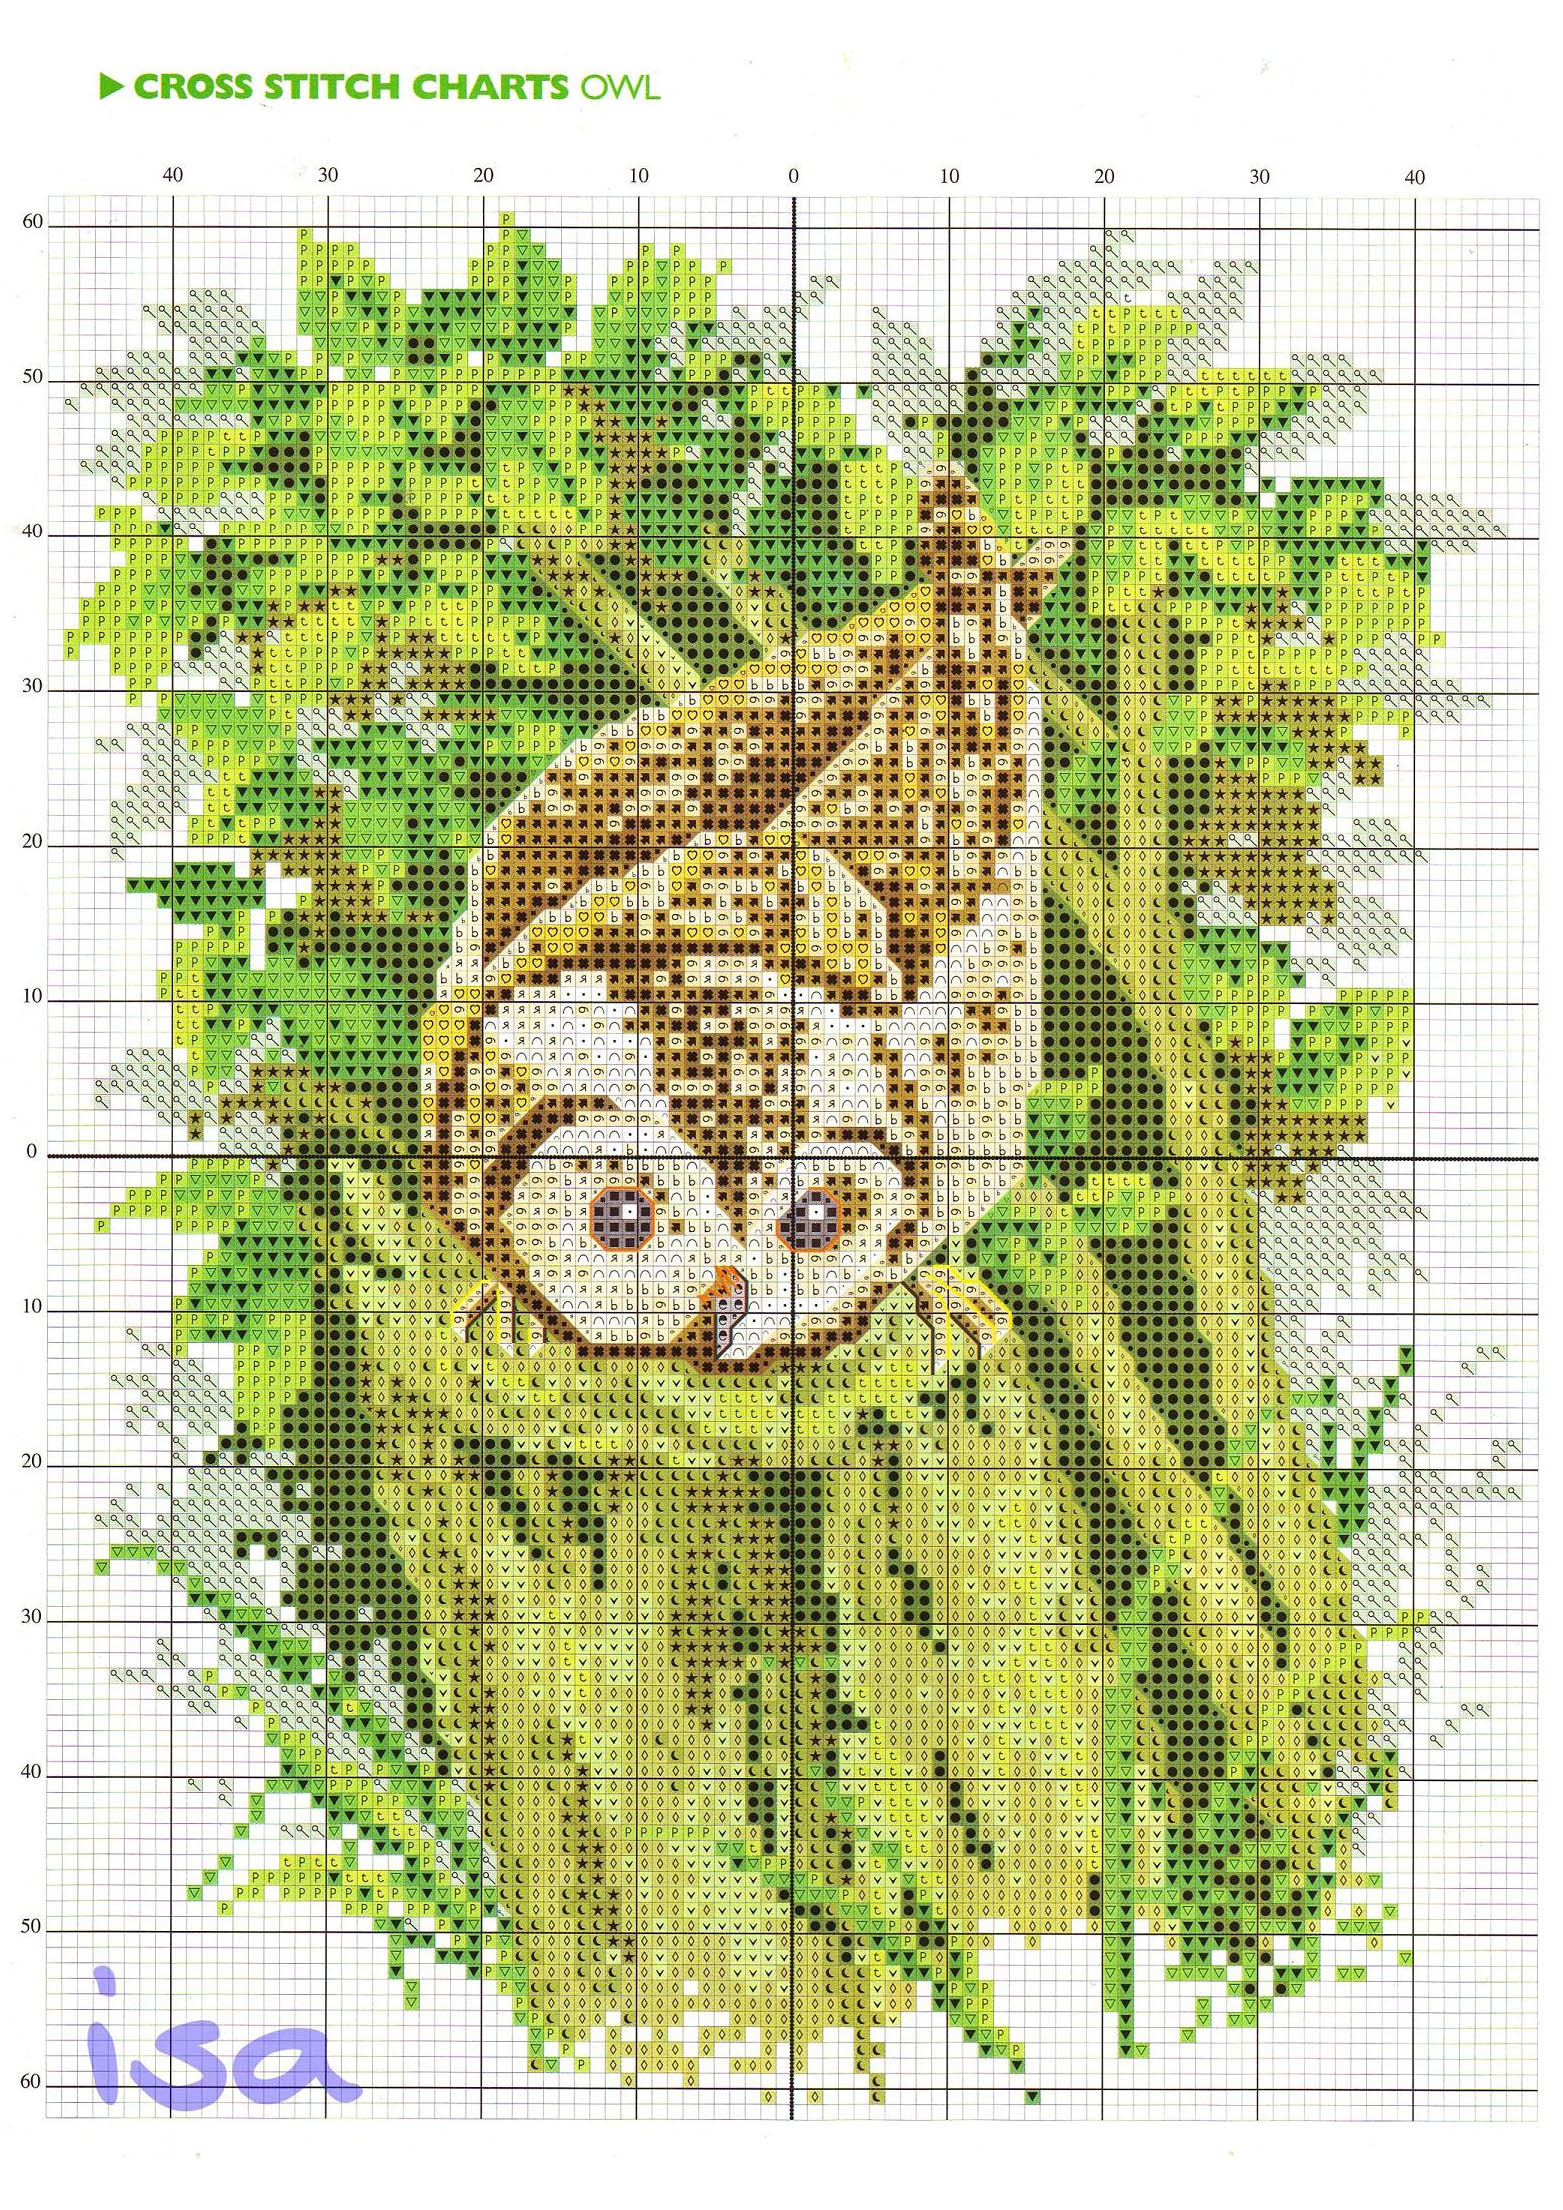 An owl on a wooden trunk cross stitch pattern (2)